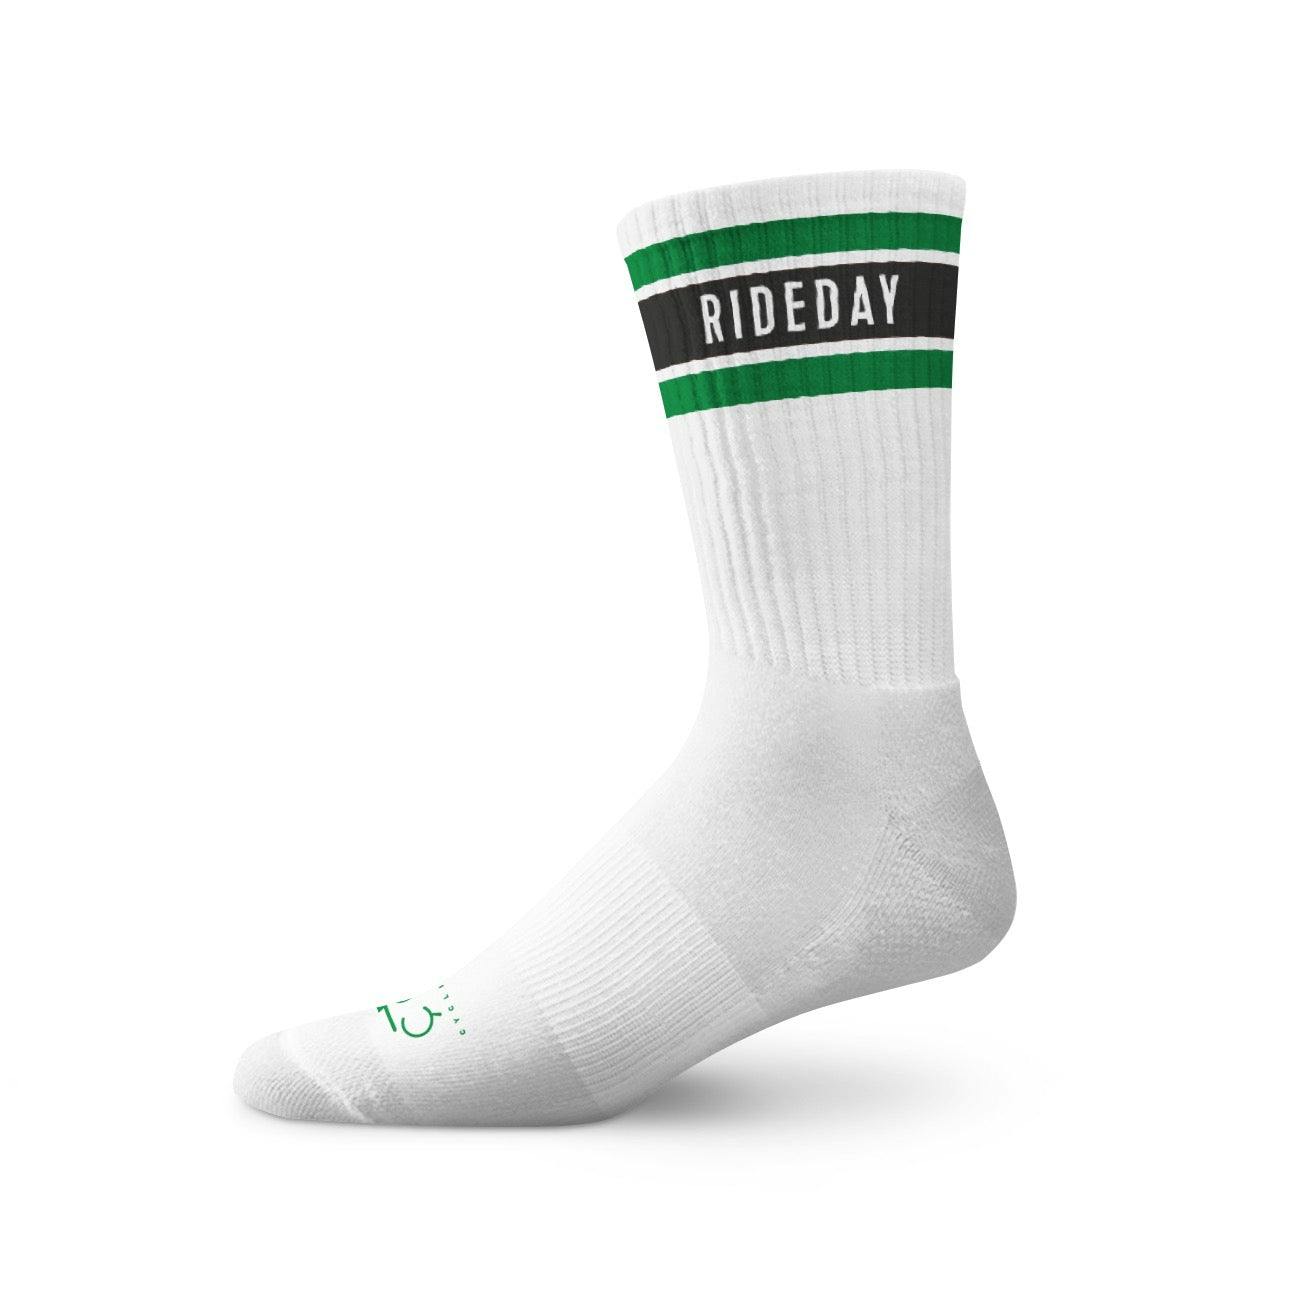 Rideday Retro Crew Socks - Green/Black